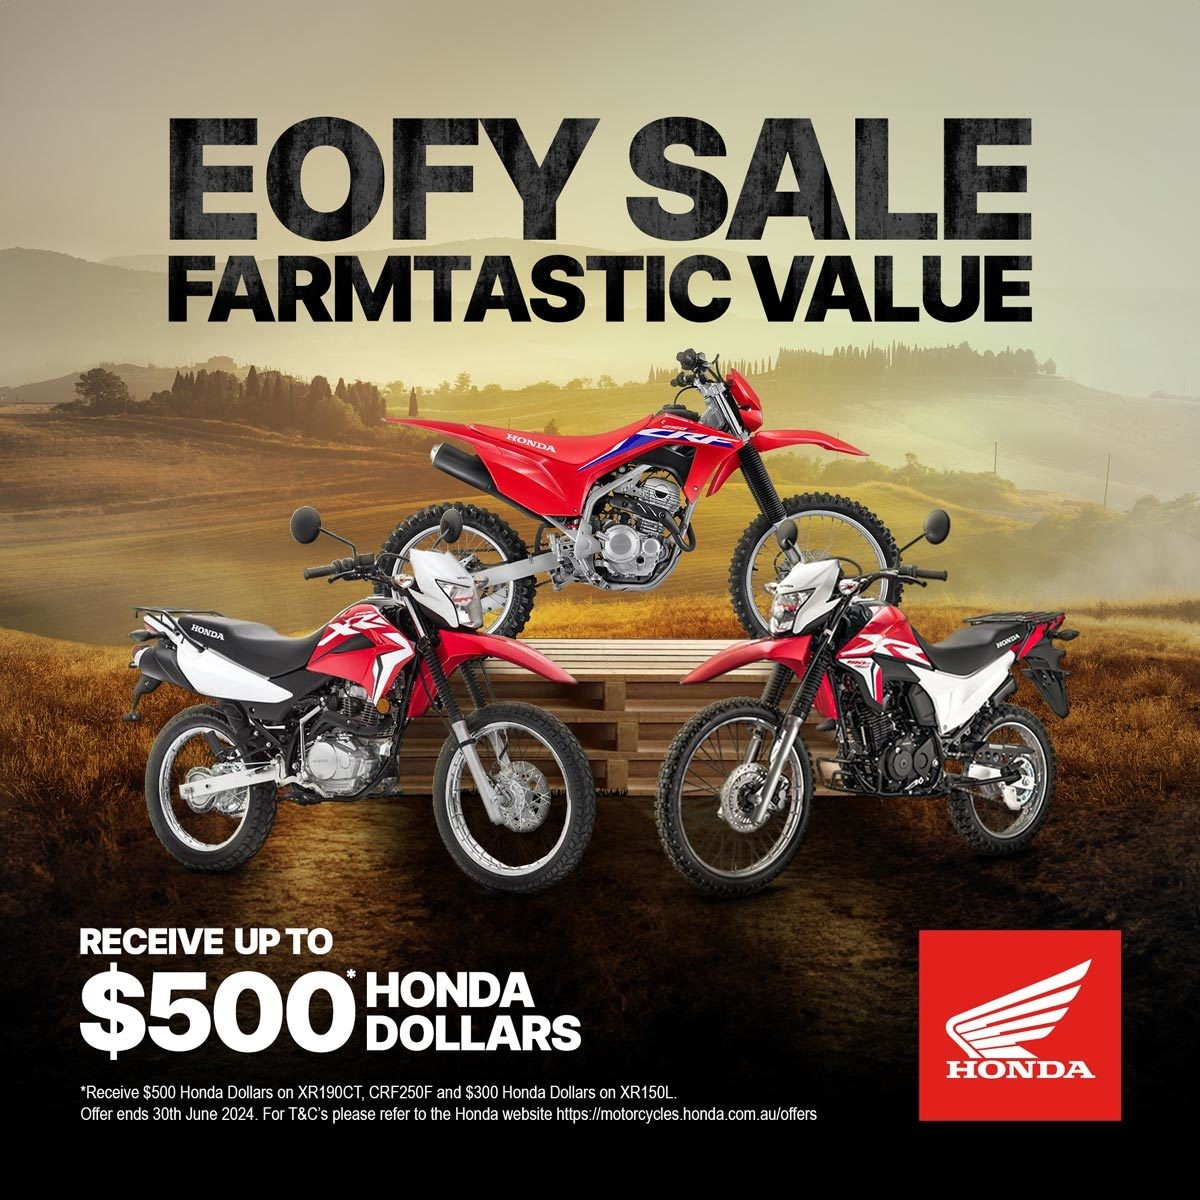 EOFY Sale Farmtastic Value Receive $500 Honda Dollars*